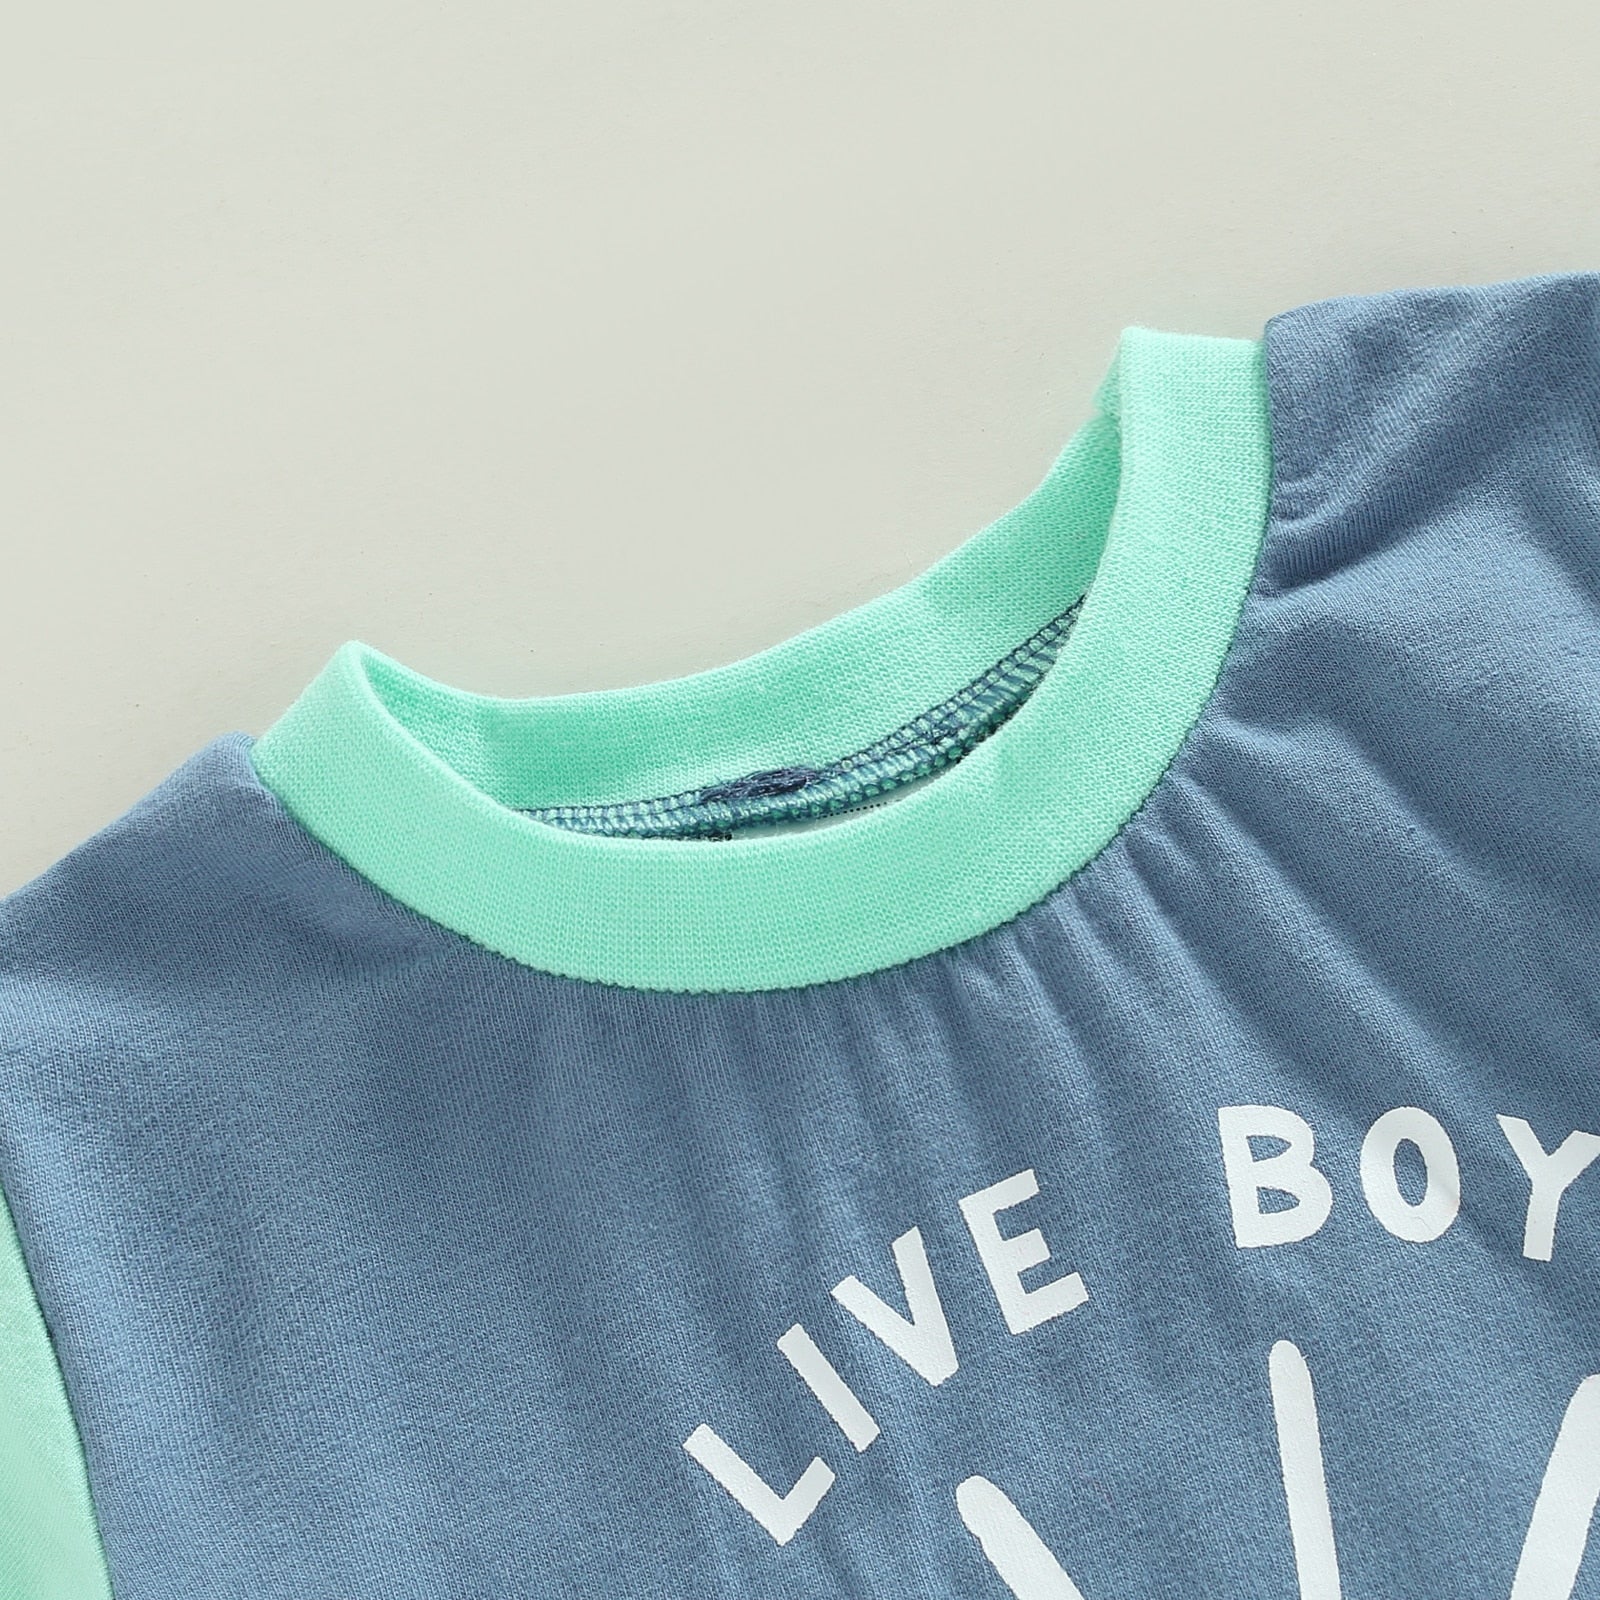 Long Live Boyhood T-shirt & Shorts